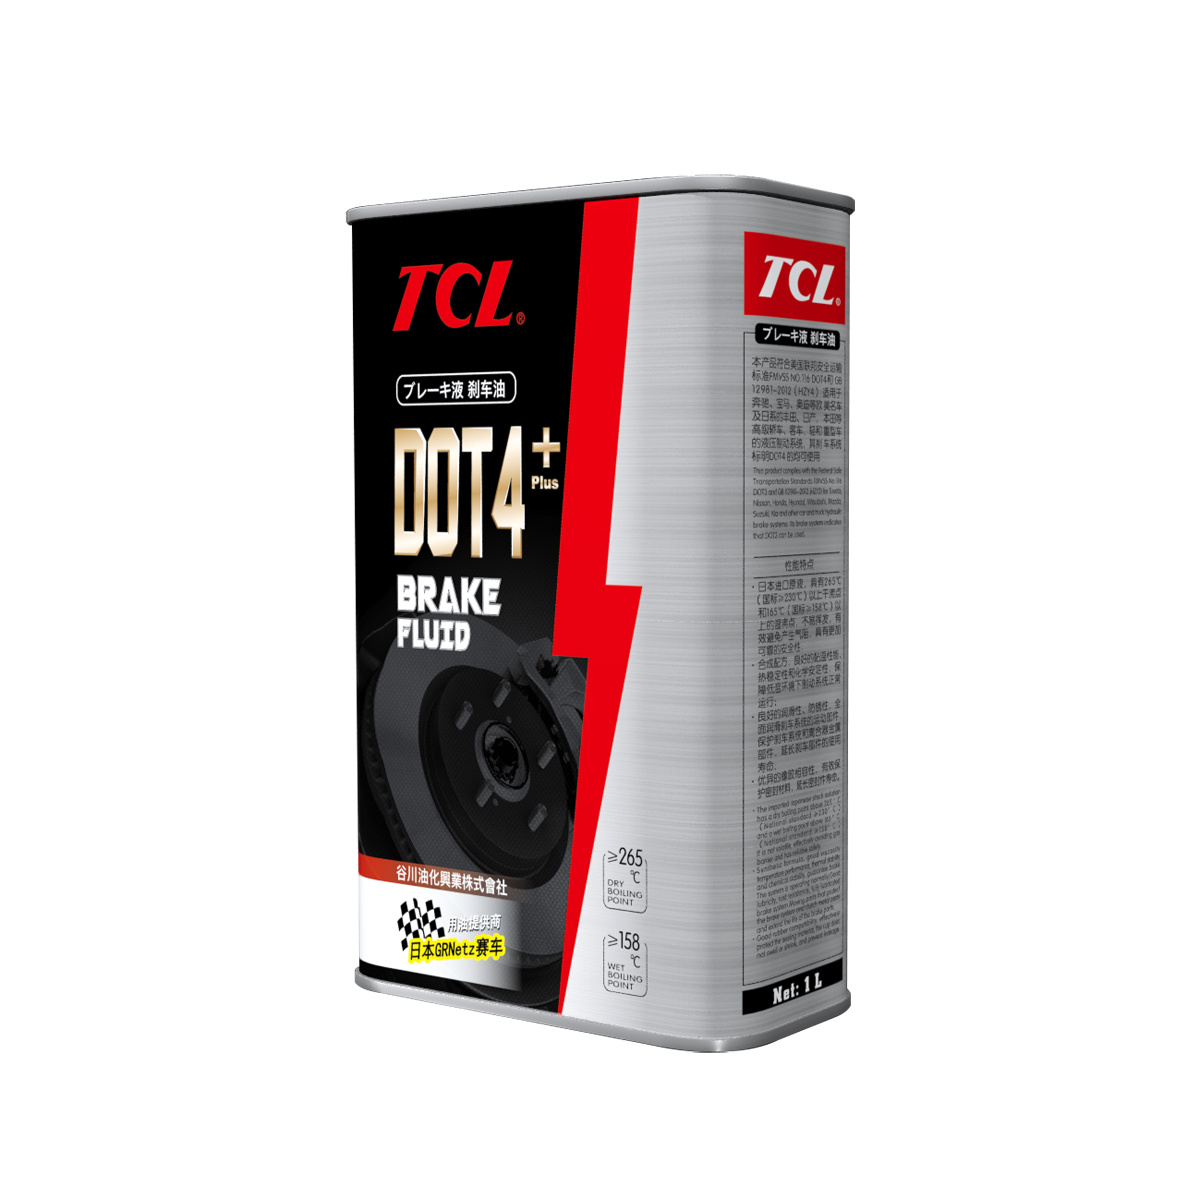 TCL - Brake Fluid DOT 4+